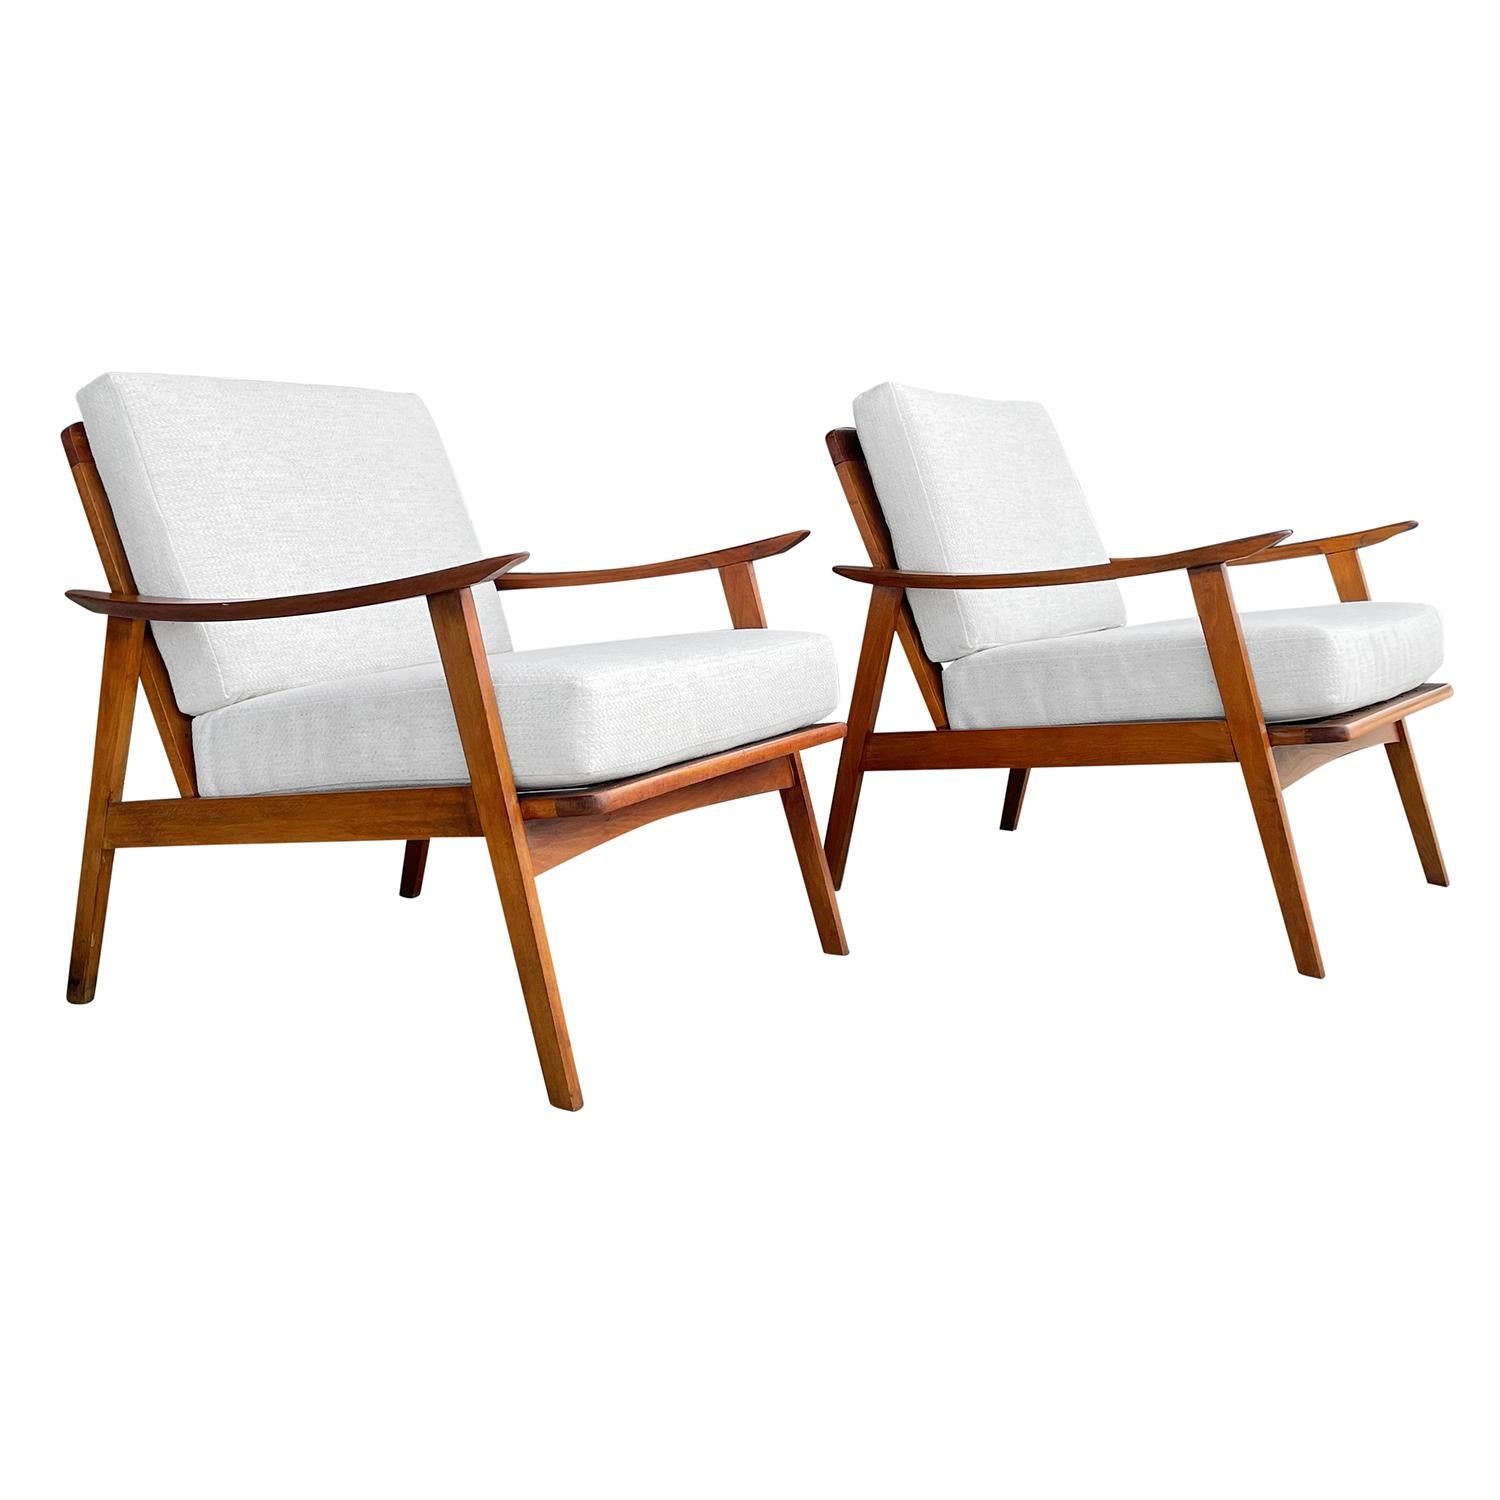 20th Century Danish Vintage Modern Pair of Open Teak Chairs by Kai Kristiansen For Sale 2